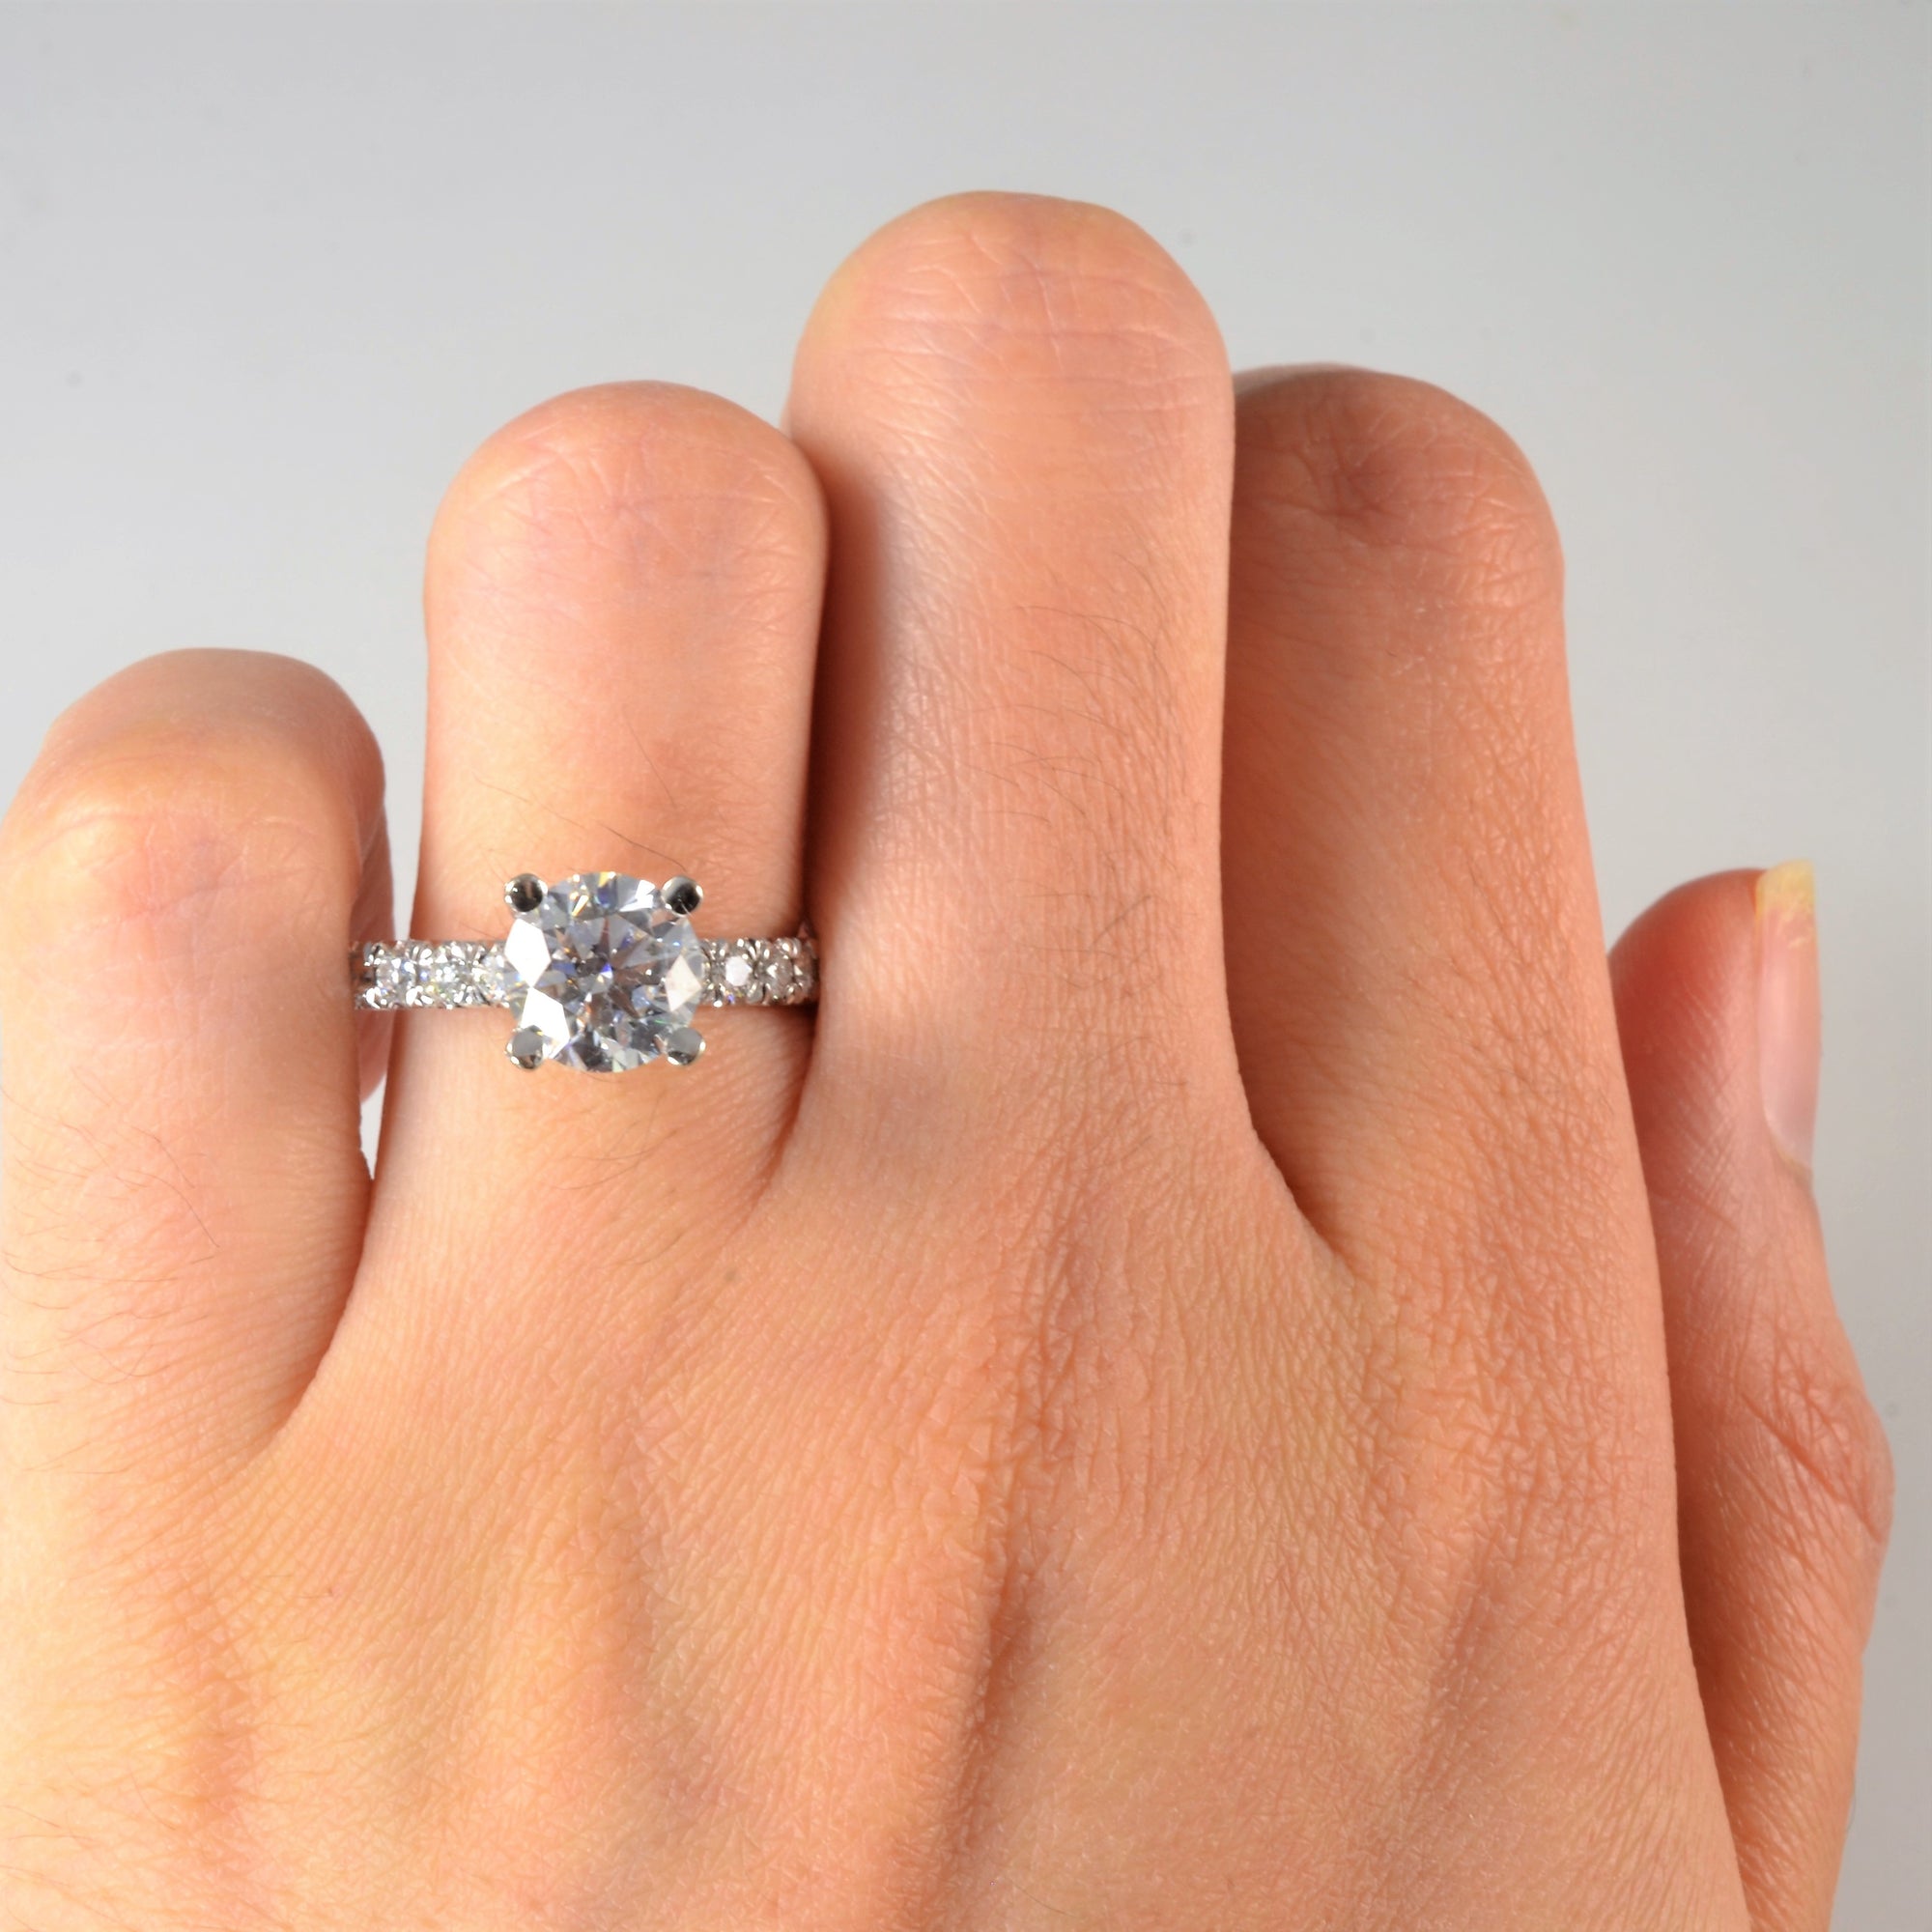 Sparkling Diamond Gallery Engagement Ring | 2.57ctw | SZ 7.25 |